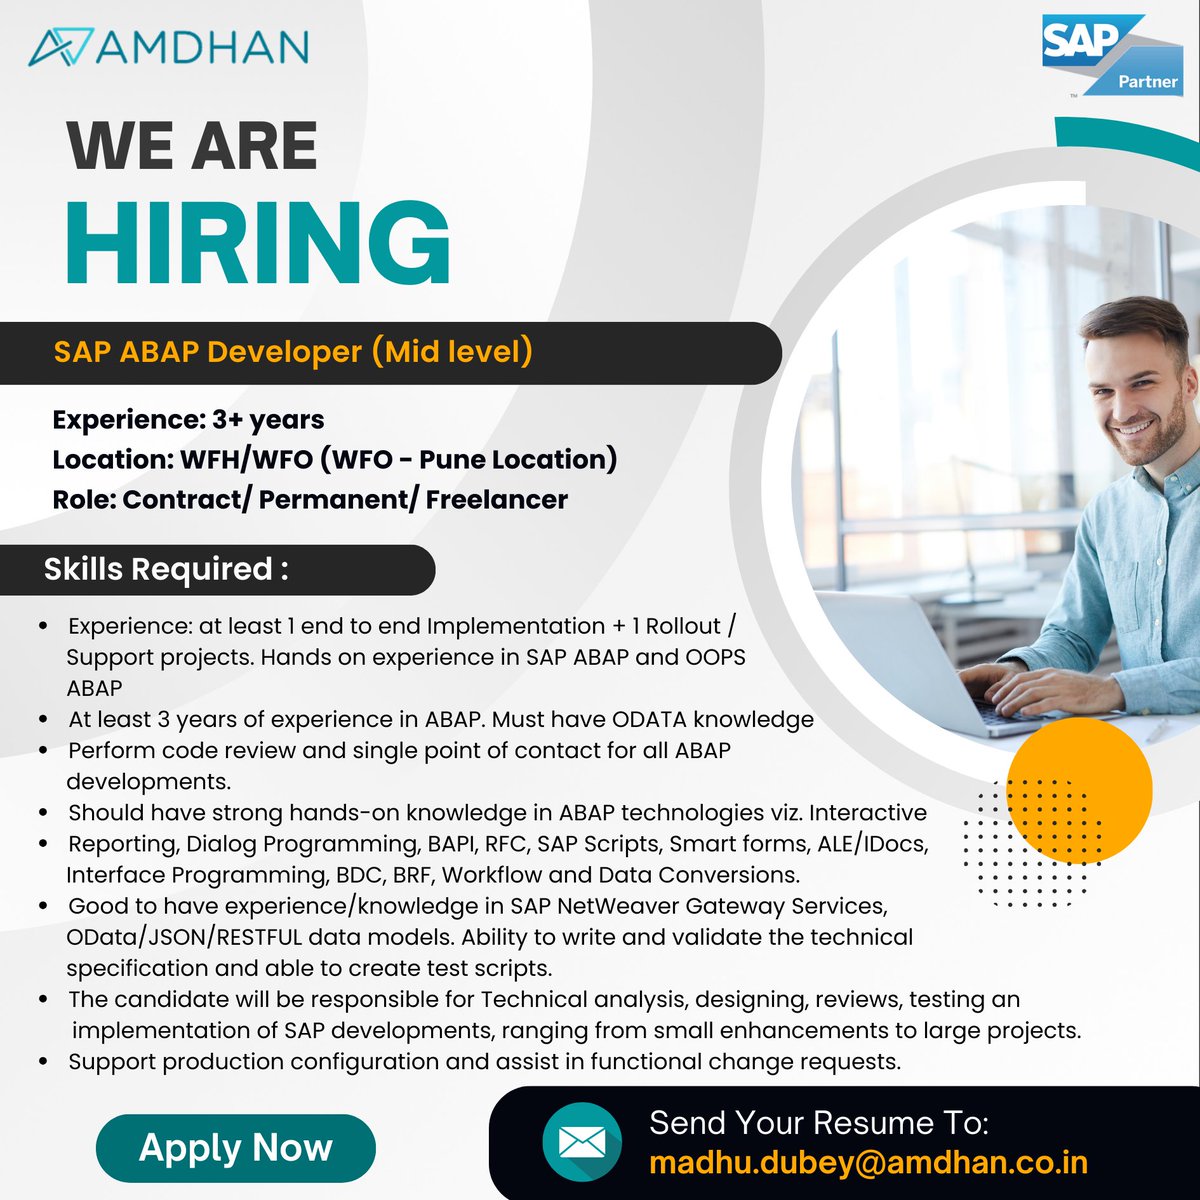 We Are Hiring.

𝐏𝐨𝐬𝐢𝐭𝐢𝐨𝐧: SAP ABAP Developer (Mid level)

𝐀𝐩𝐩𝐥𝐲 𝐍𝐨𝐰 𝐎𝐧 - madhu.dubey@amdhan.co.in

#sapabapconsultant #abapconsultant #sapconsultant #abapdeveloper #sapabap #abap #hiringpost #hiring #sapjobs #saphiring #sapjob #recruitment #amdhan #sap #itjobs